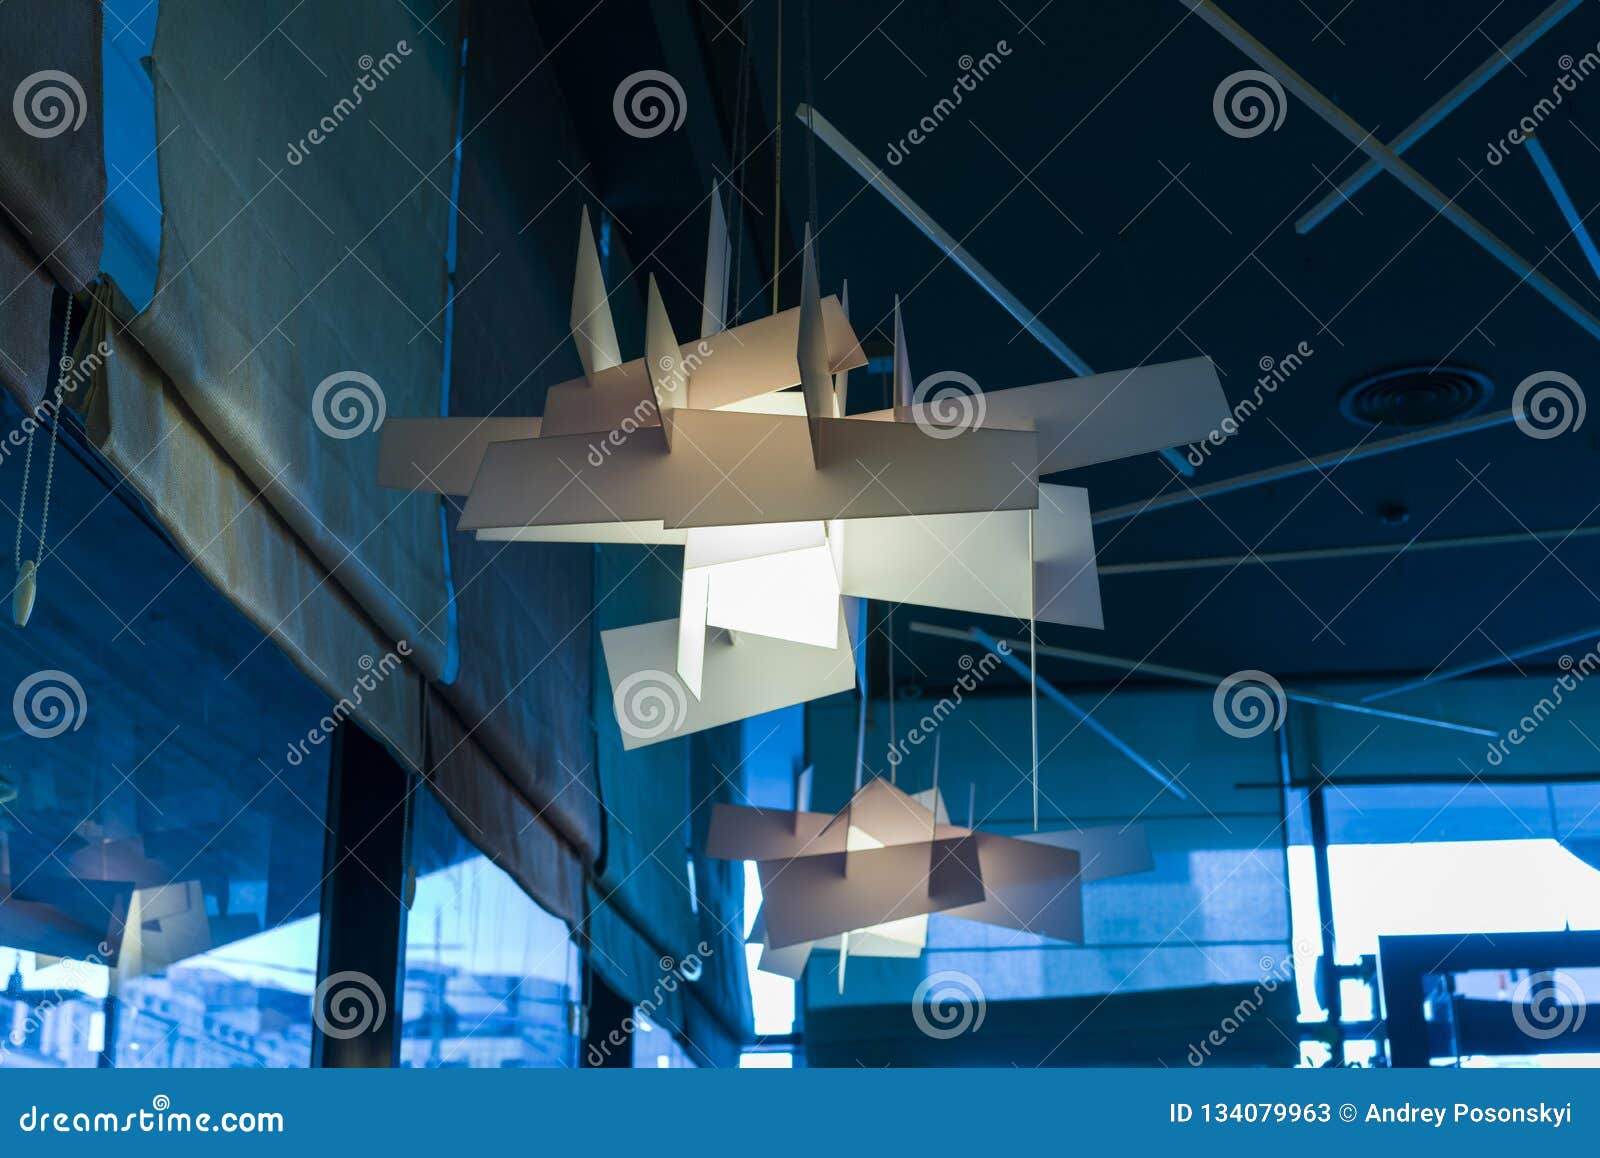 Chandelier In The Interior Of Plastic Hangs Stock Image